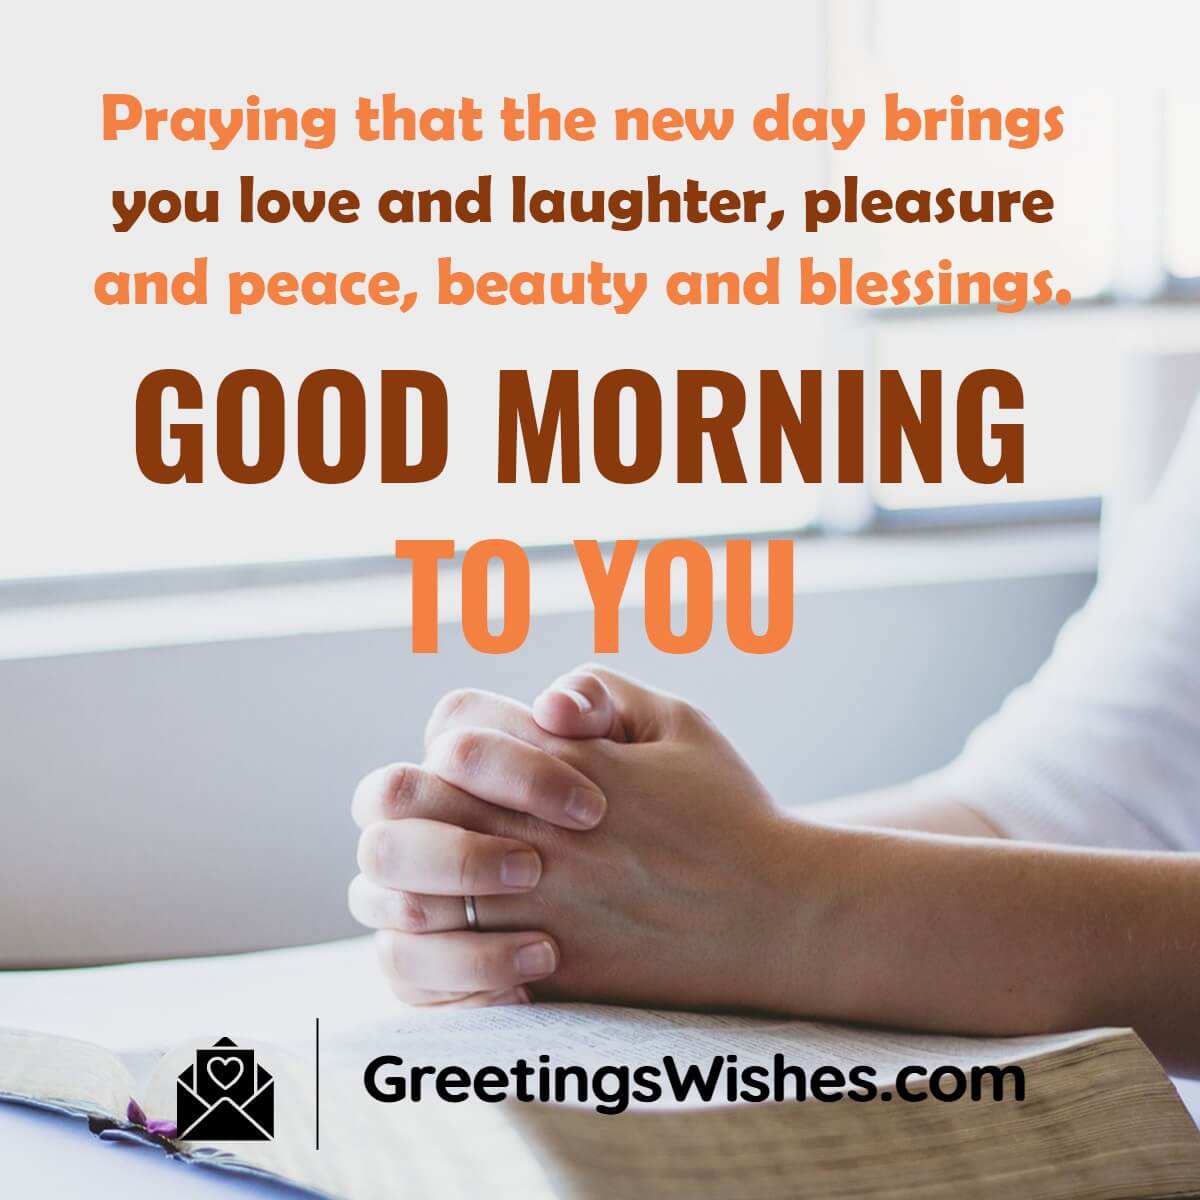 good morning prayer images